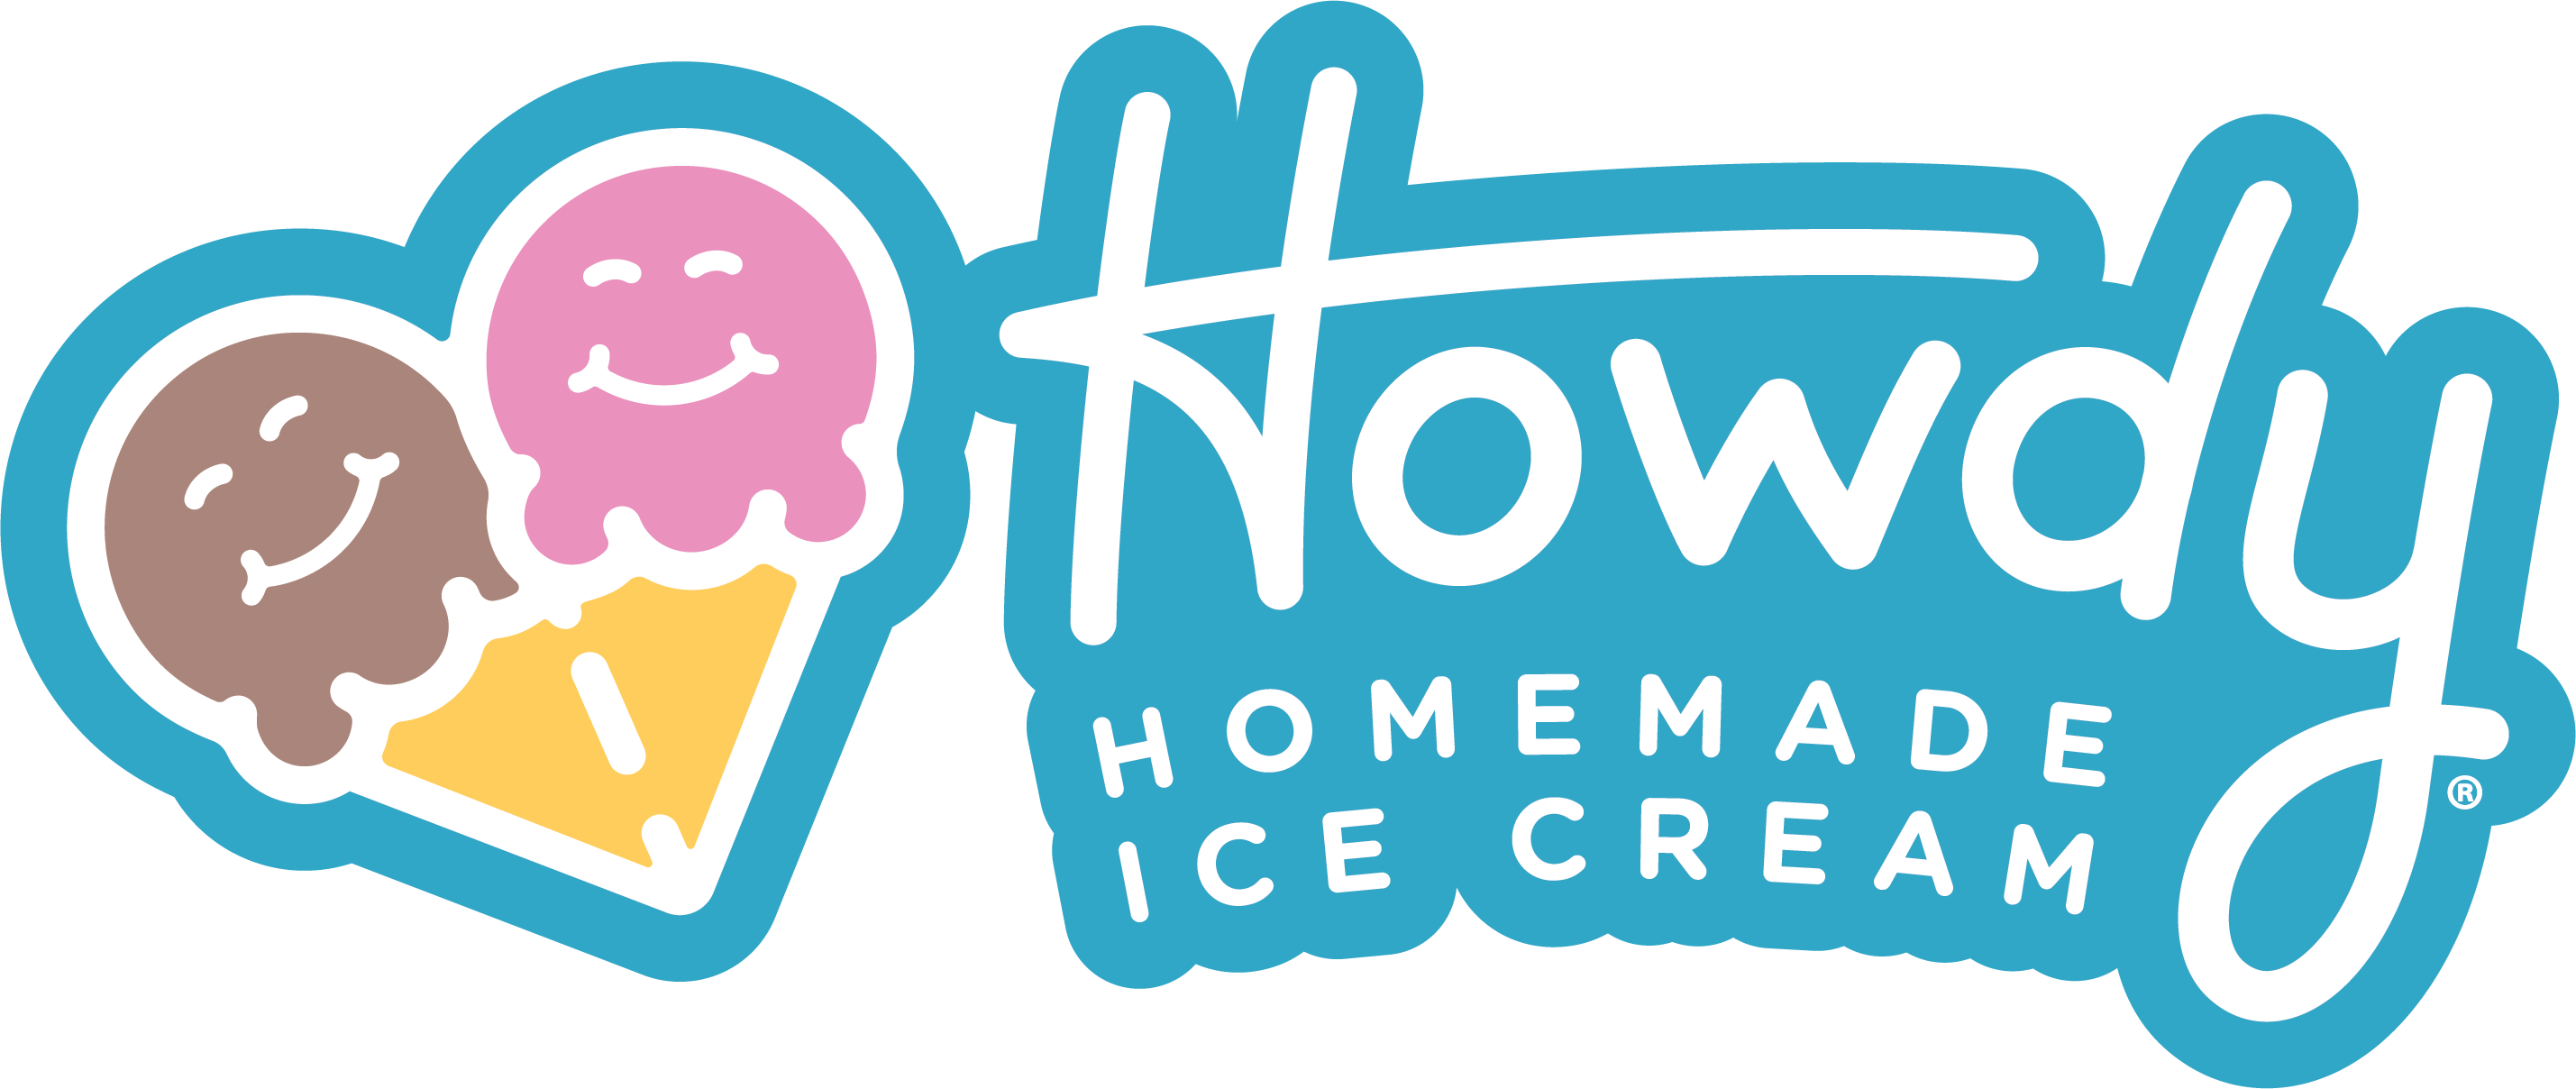 Howdy Homemade Ice Cream Home